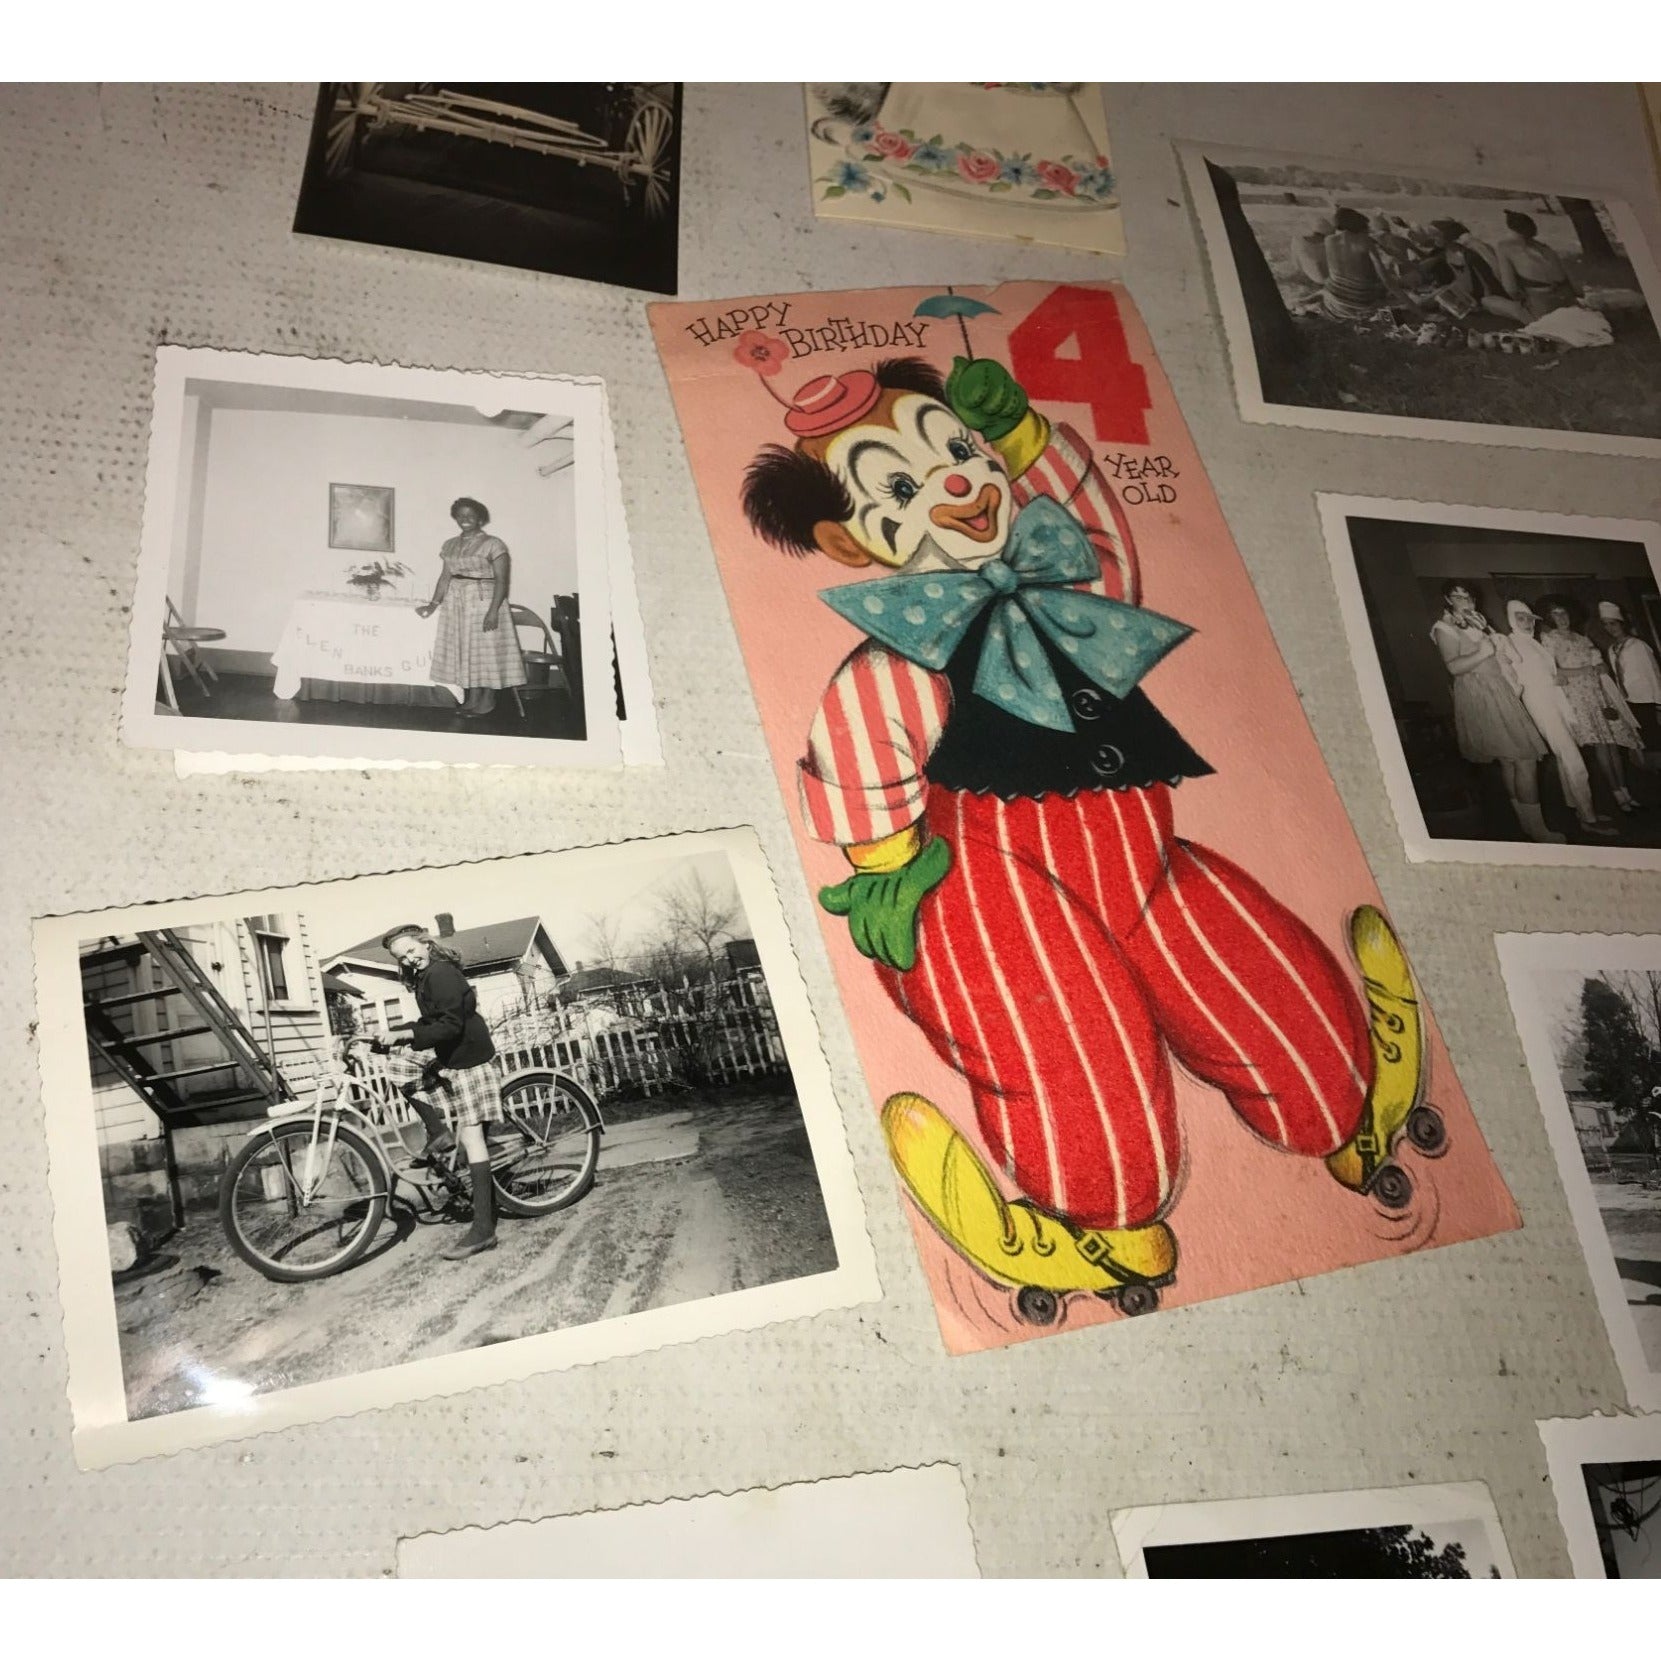 1950s era Photos and cards- School dance photo - high school organization group photo